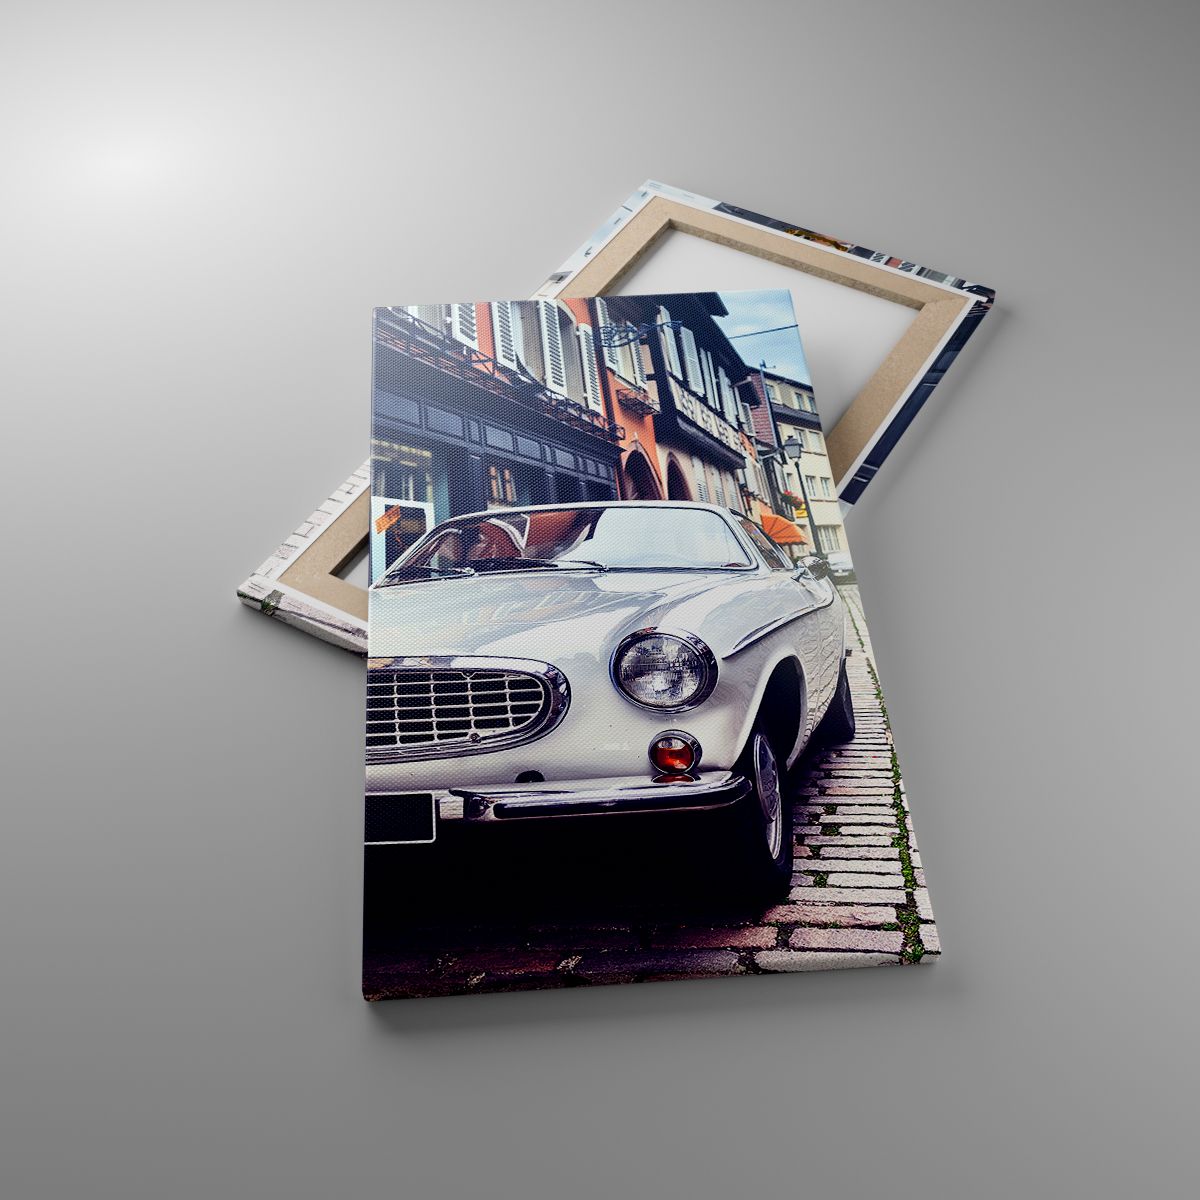 Obrazy Samochód Vintage, Obrazy Miasto, Obrazy Francja, Obrazy Uliczka, Obrazy Motoryzacja